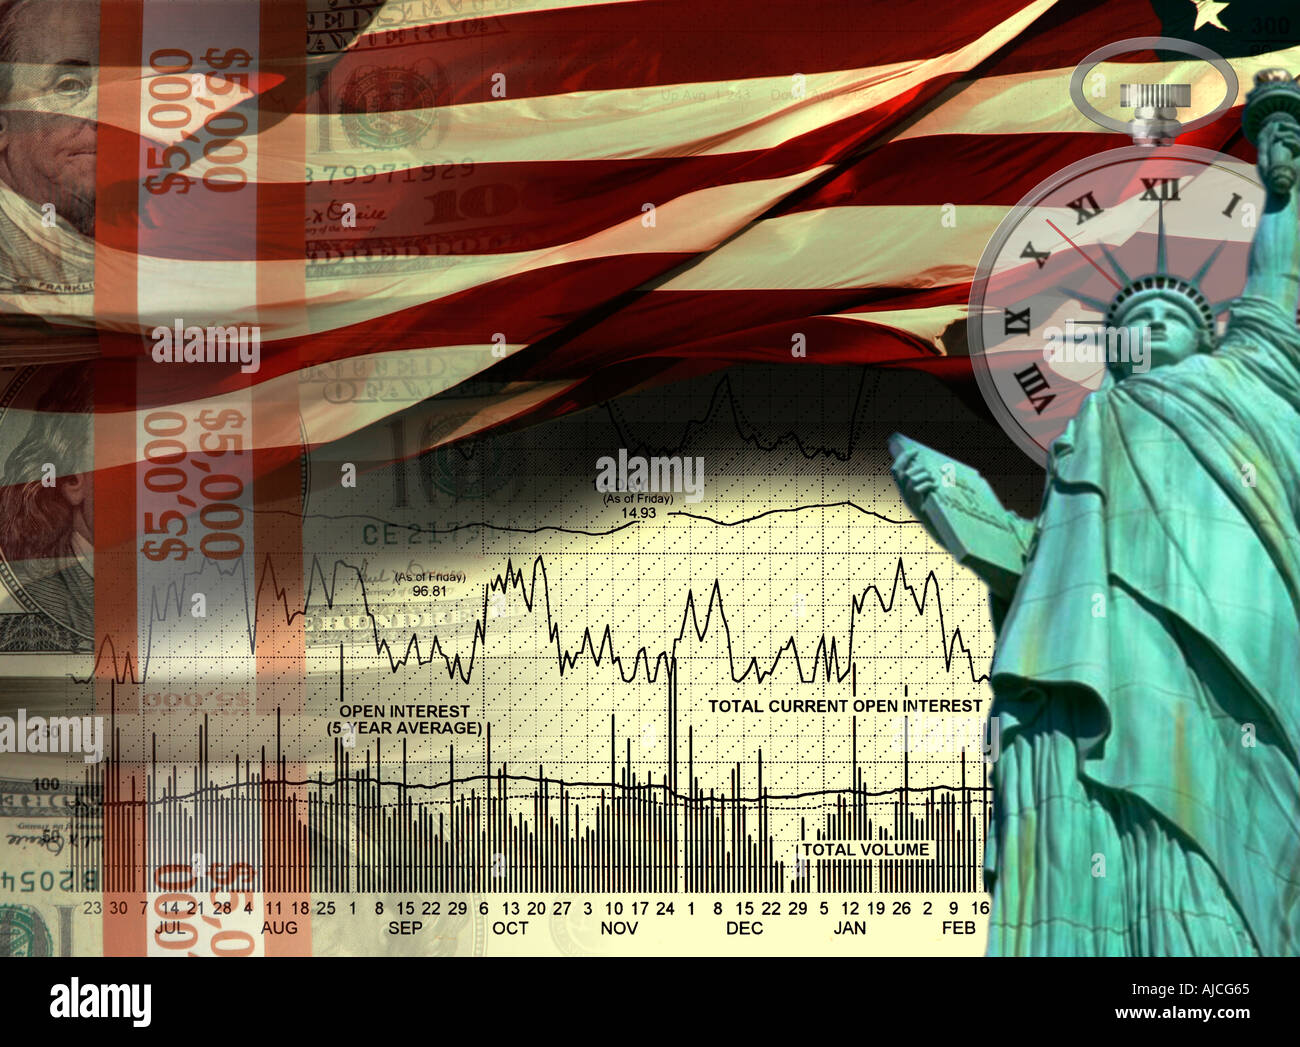 american-flag-stock-market-report-statue-of-liberty-money-symbols-of